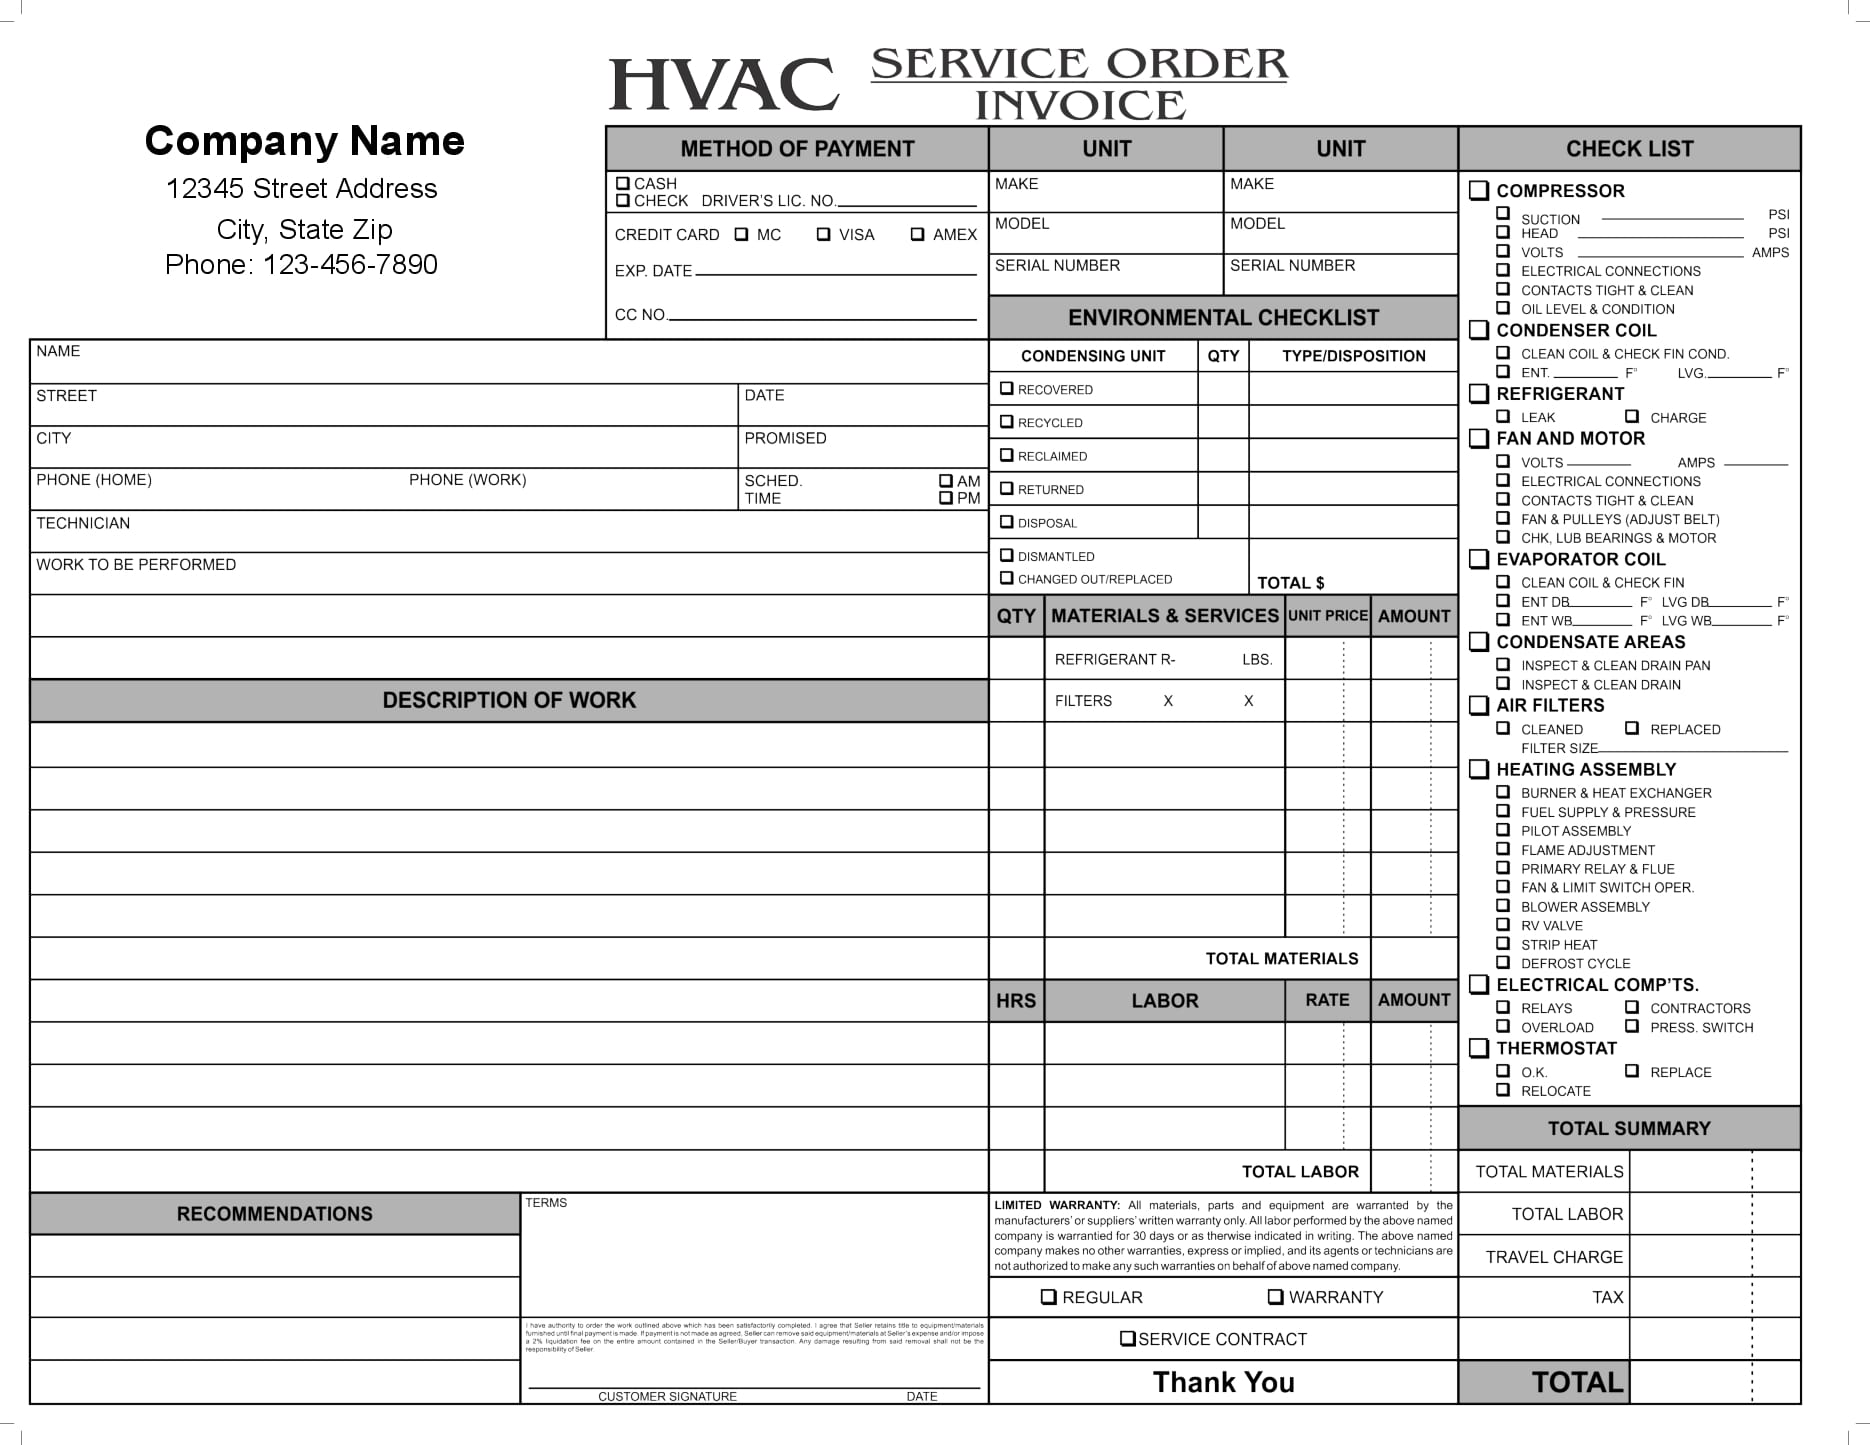 HVAC Service Order Invoice Templat